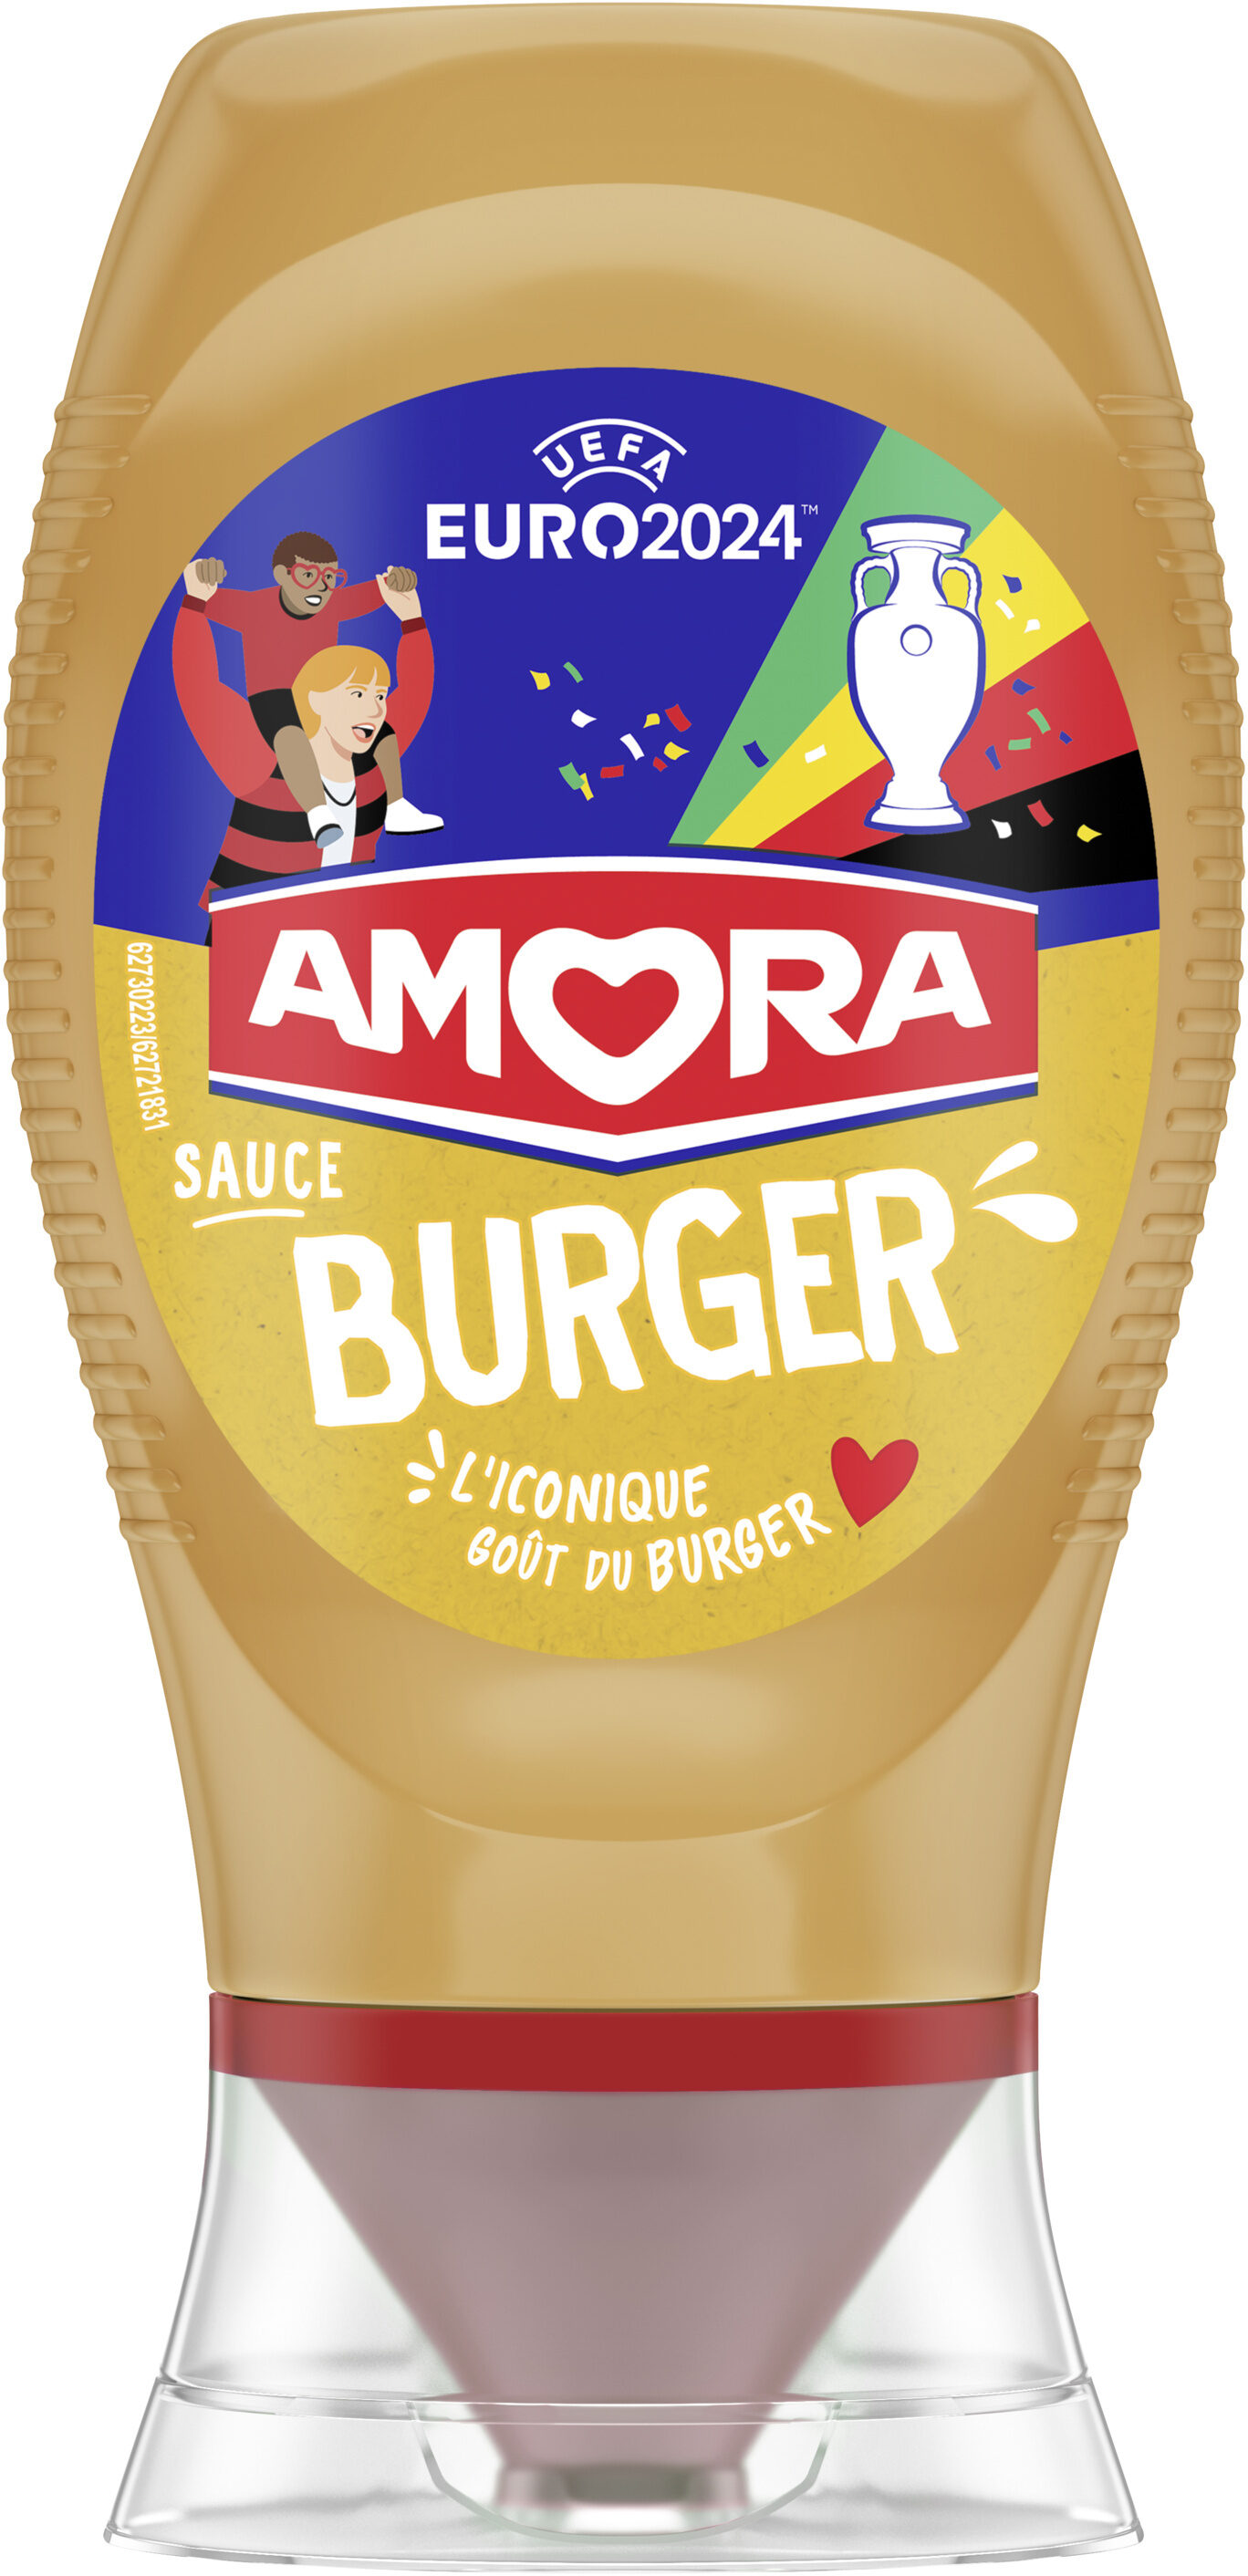 Amora sce burger 260g - Produit